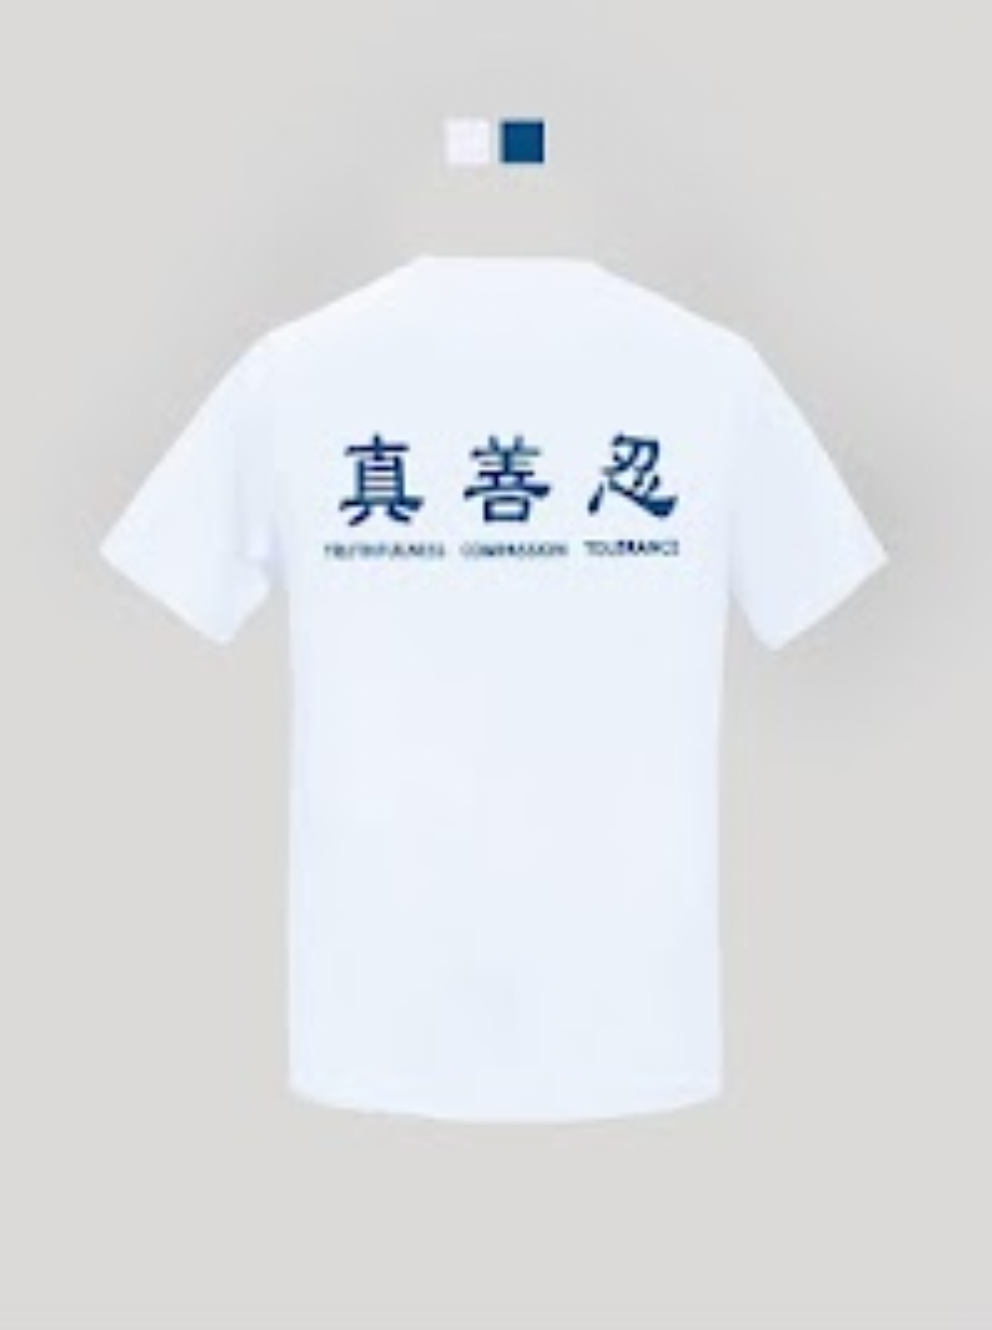 Truthfulness, Compassion, Tolerance T-Shirt with Shen Yun Dancer Logo